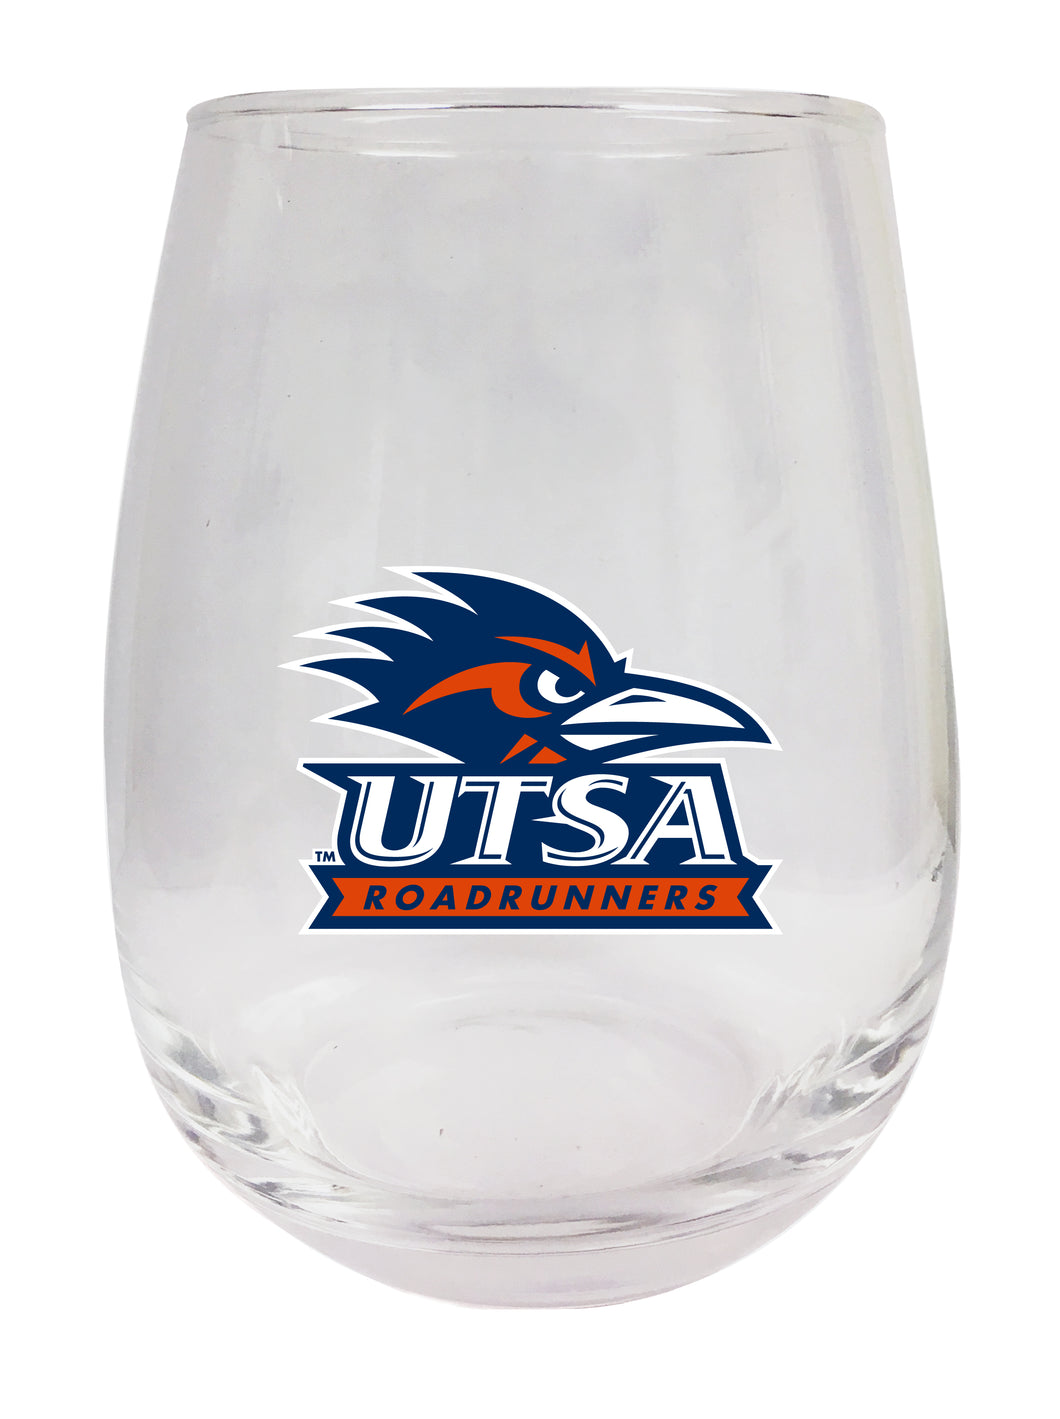 UTSA Road Runners Stemless Wine Glass - 9 oz. | Officially Licensed NCAA Merchandise